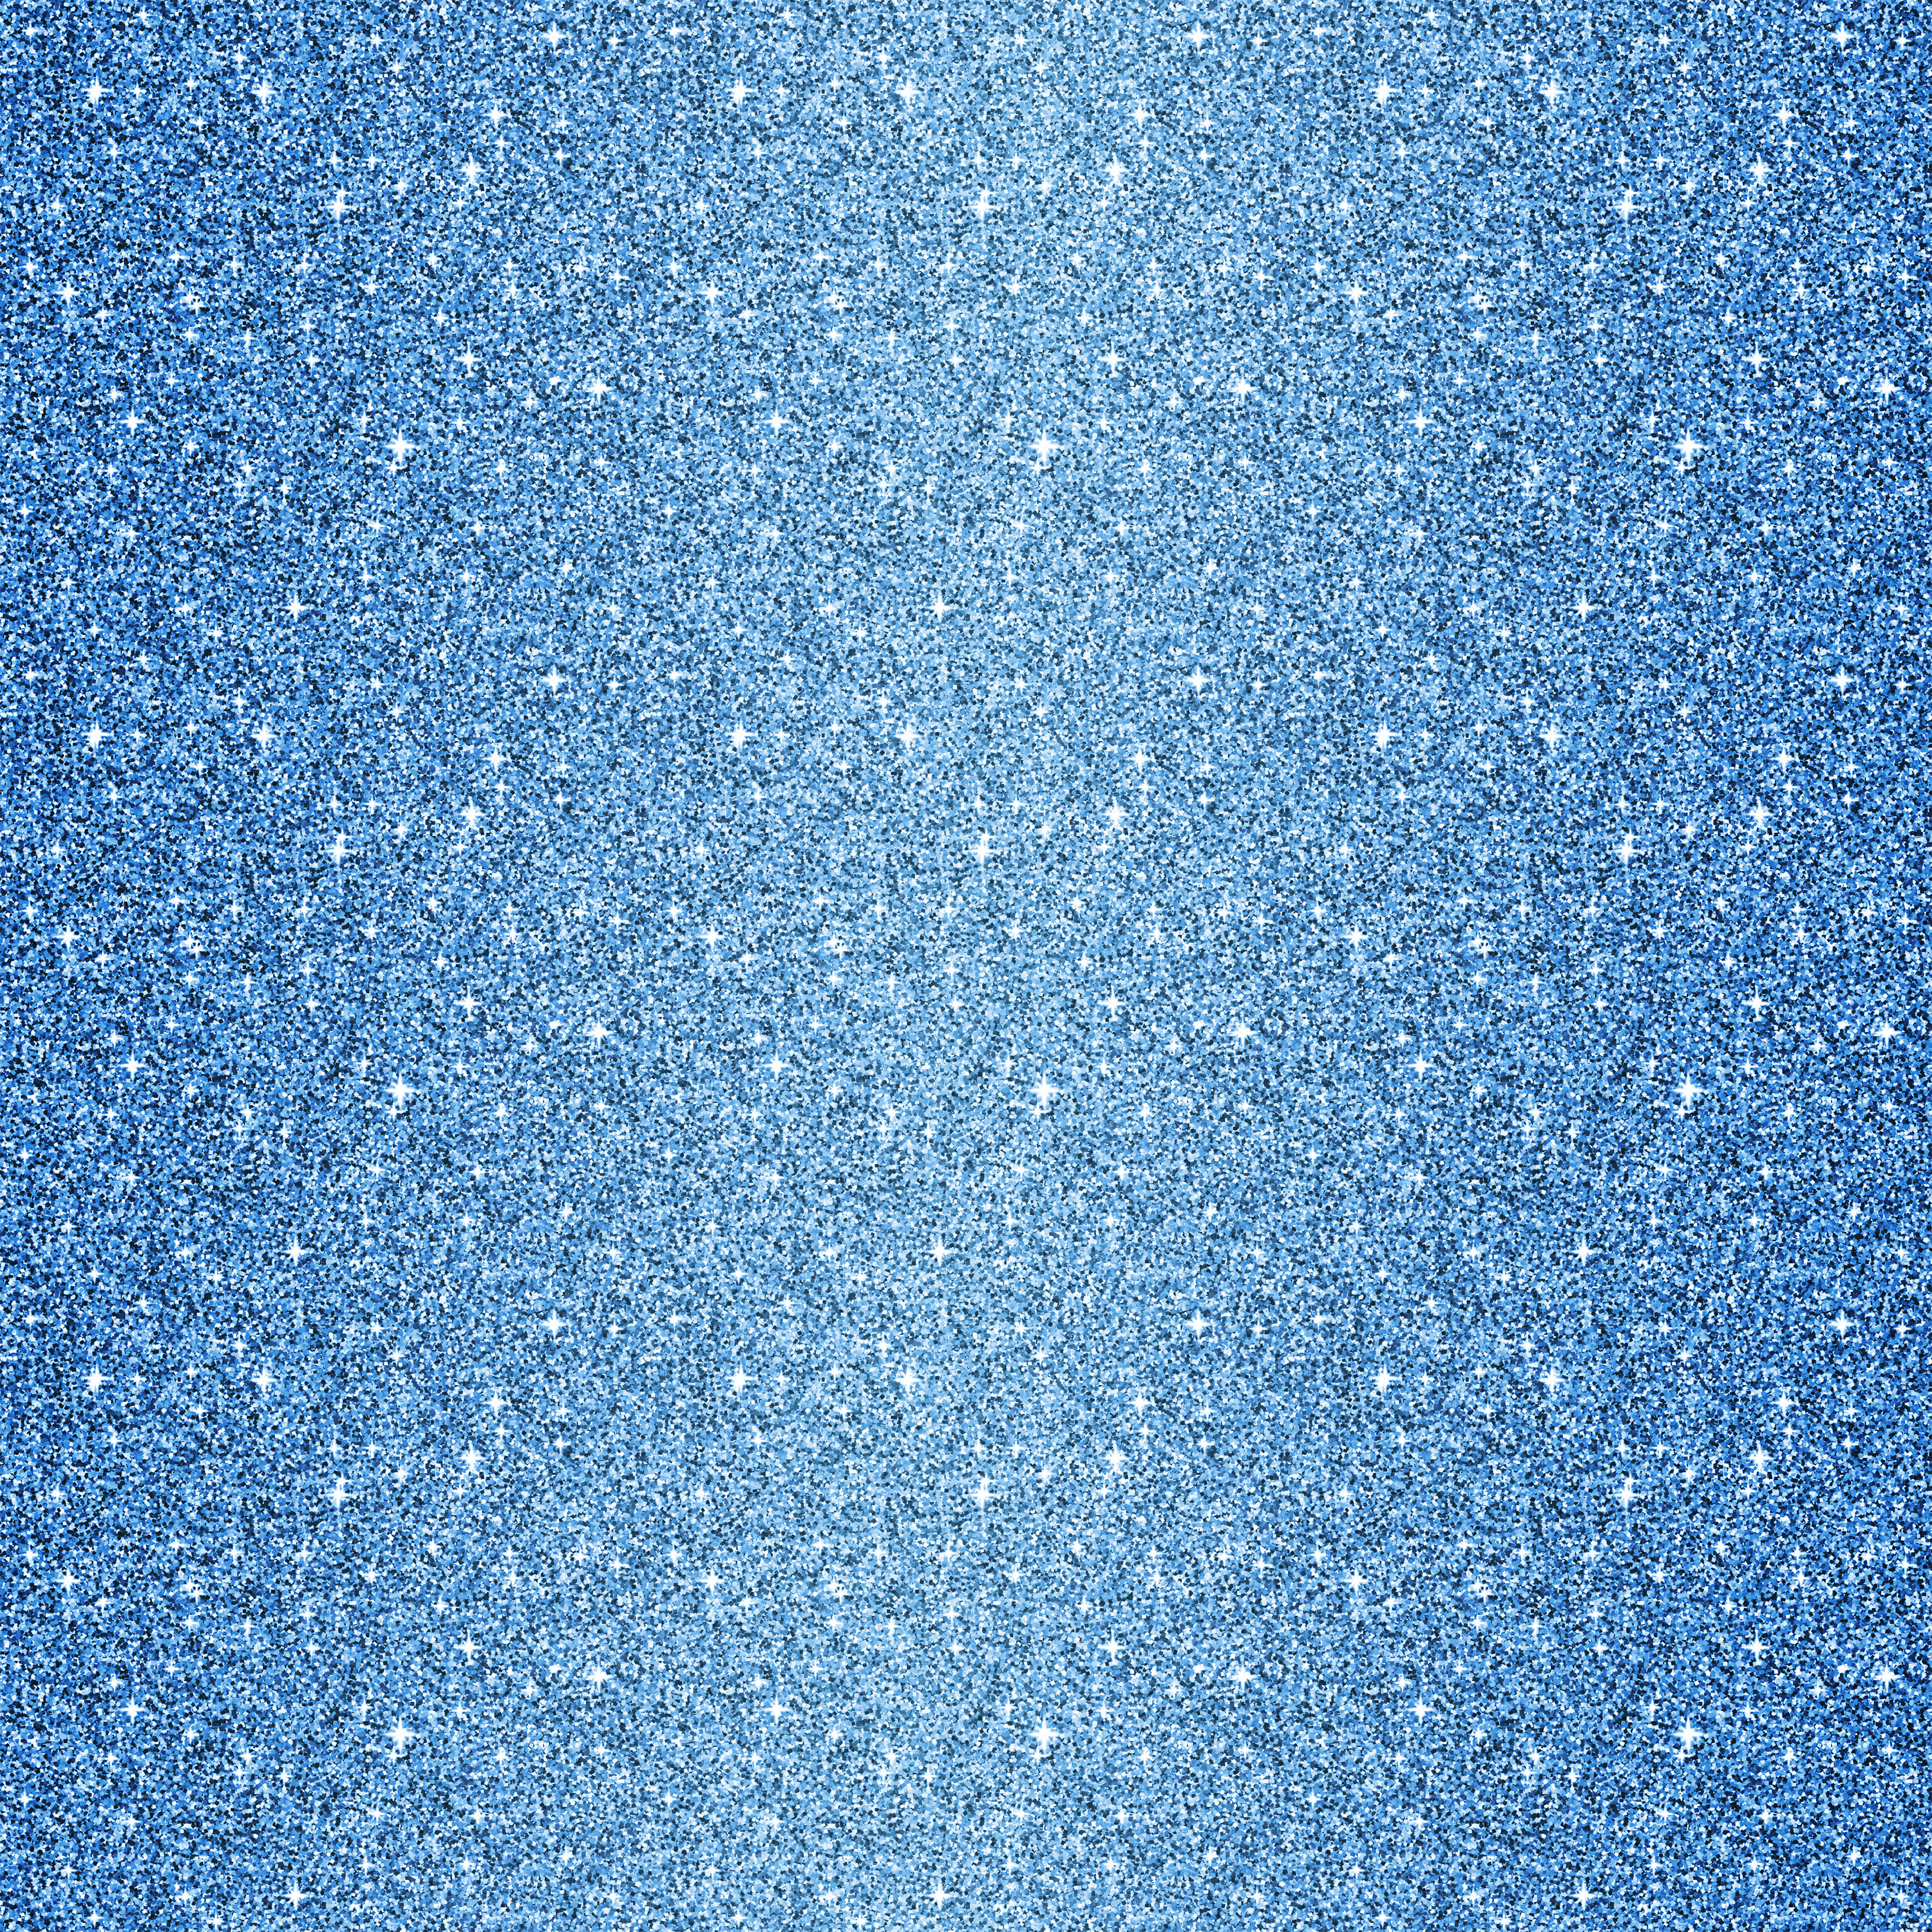 Shiny Light Blue Glitter Background, Texture For Superior Elegant Design  Stock Image Image Of Backdrop, Bright: 179813799 |  :443